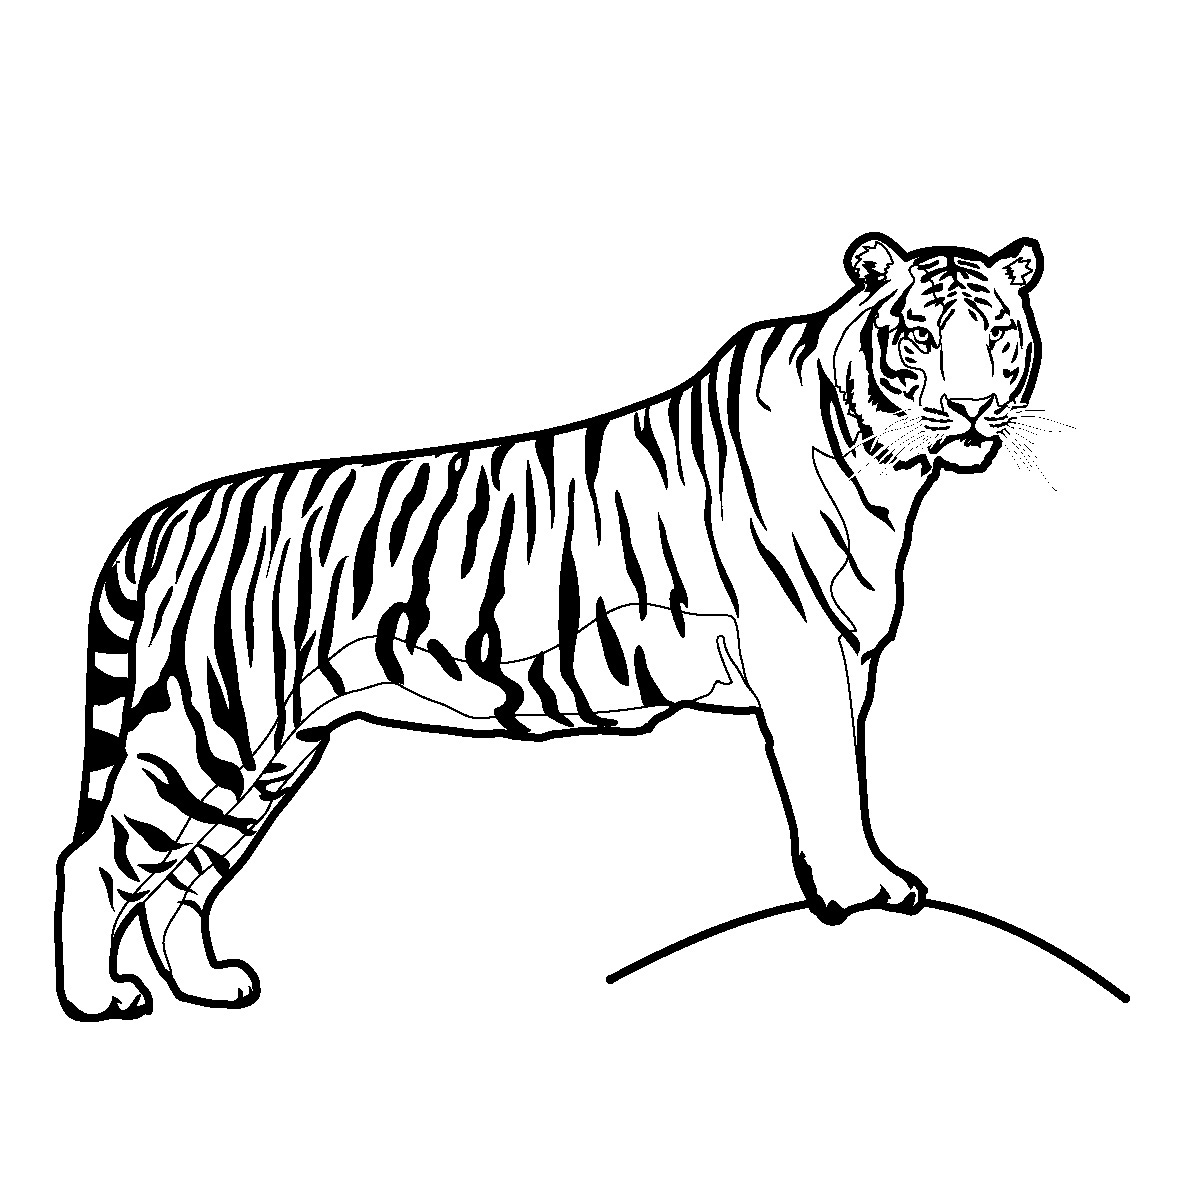 Clip art free black and white tiger